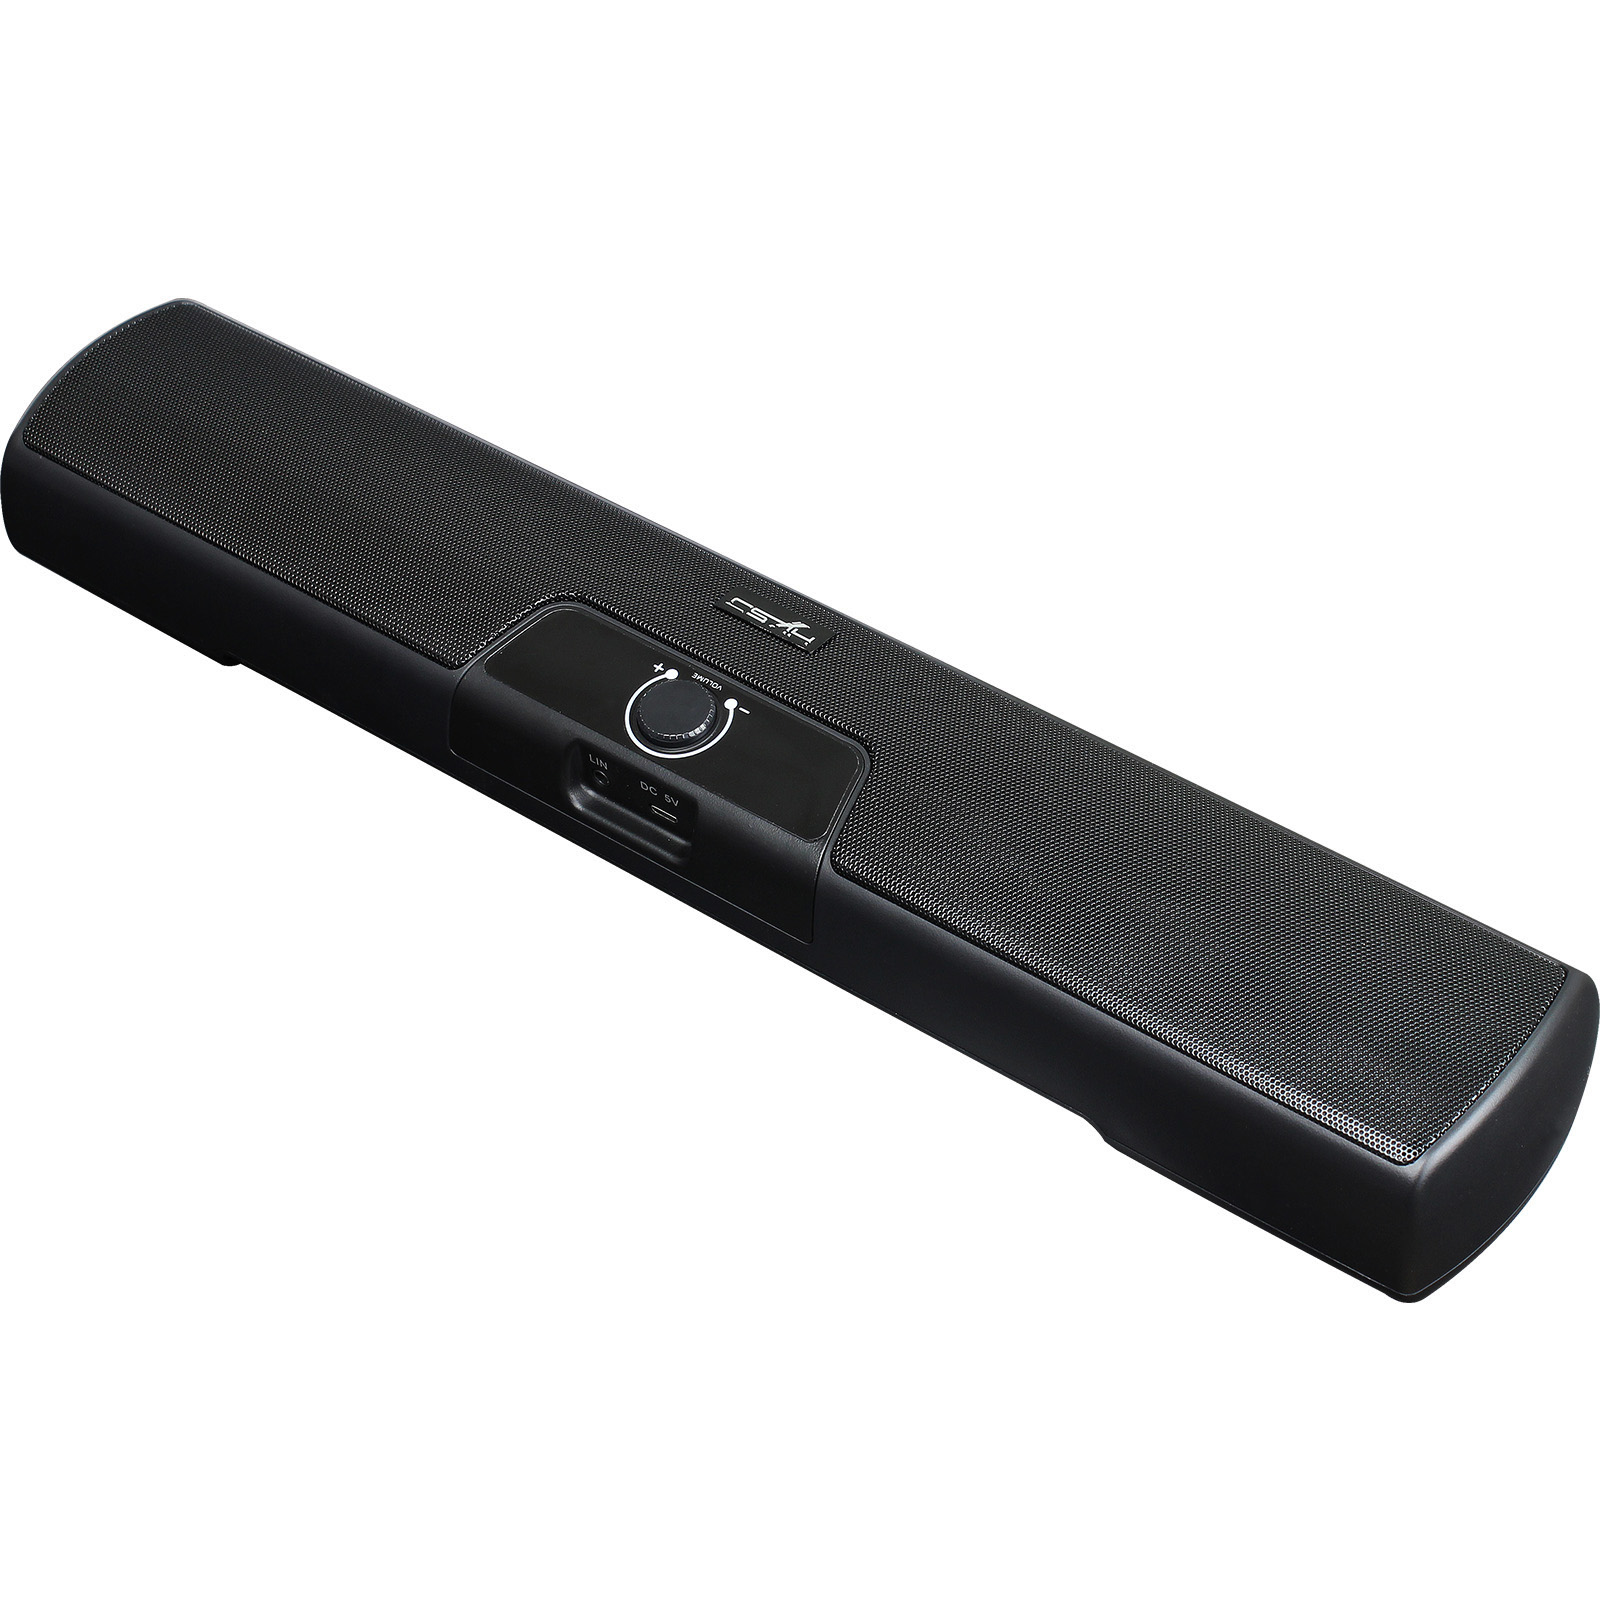 Computer Stereo Speaker USB Powered Portable Mini Sound Bar for Windows PCs Desktop Computer Laptop black